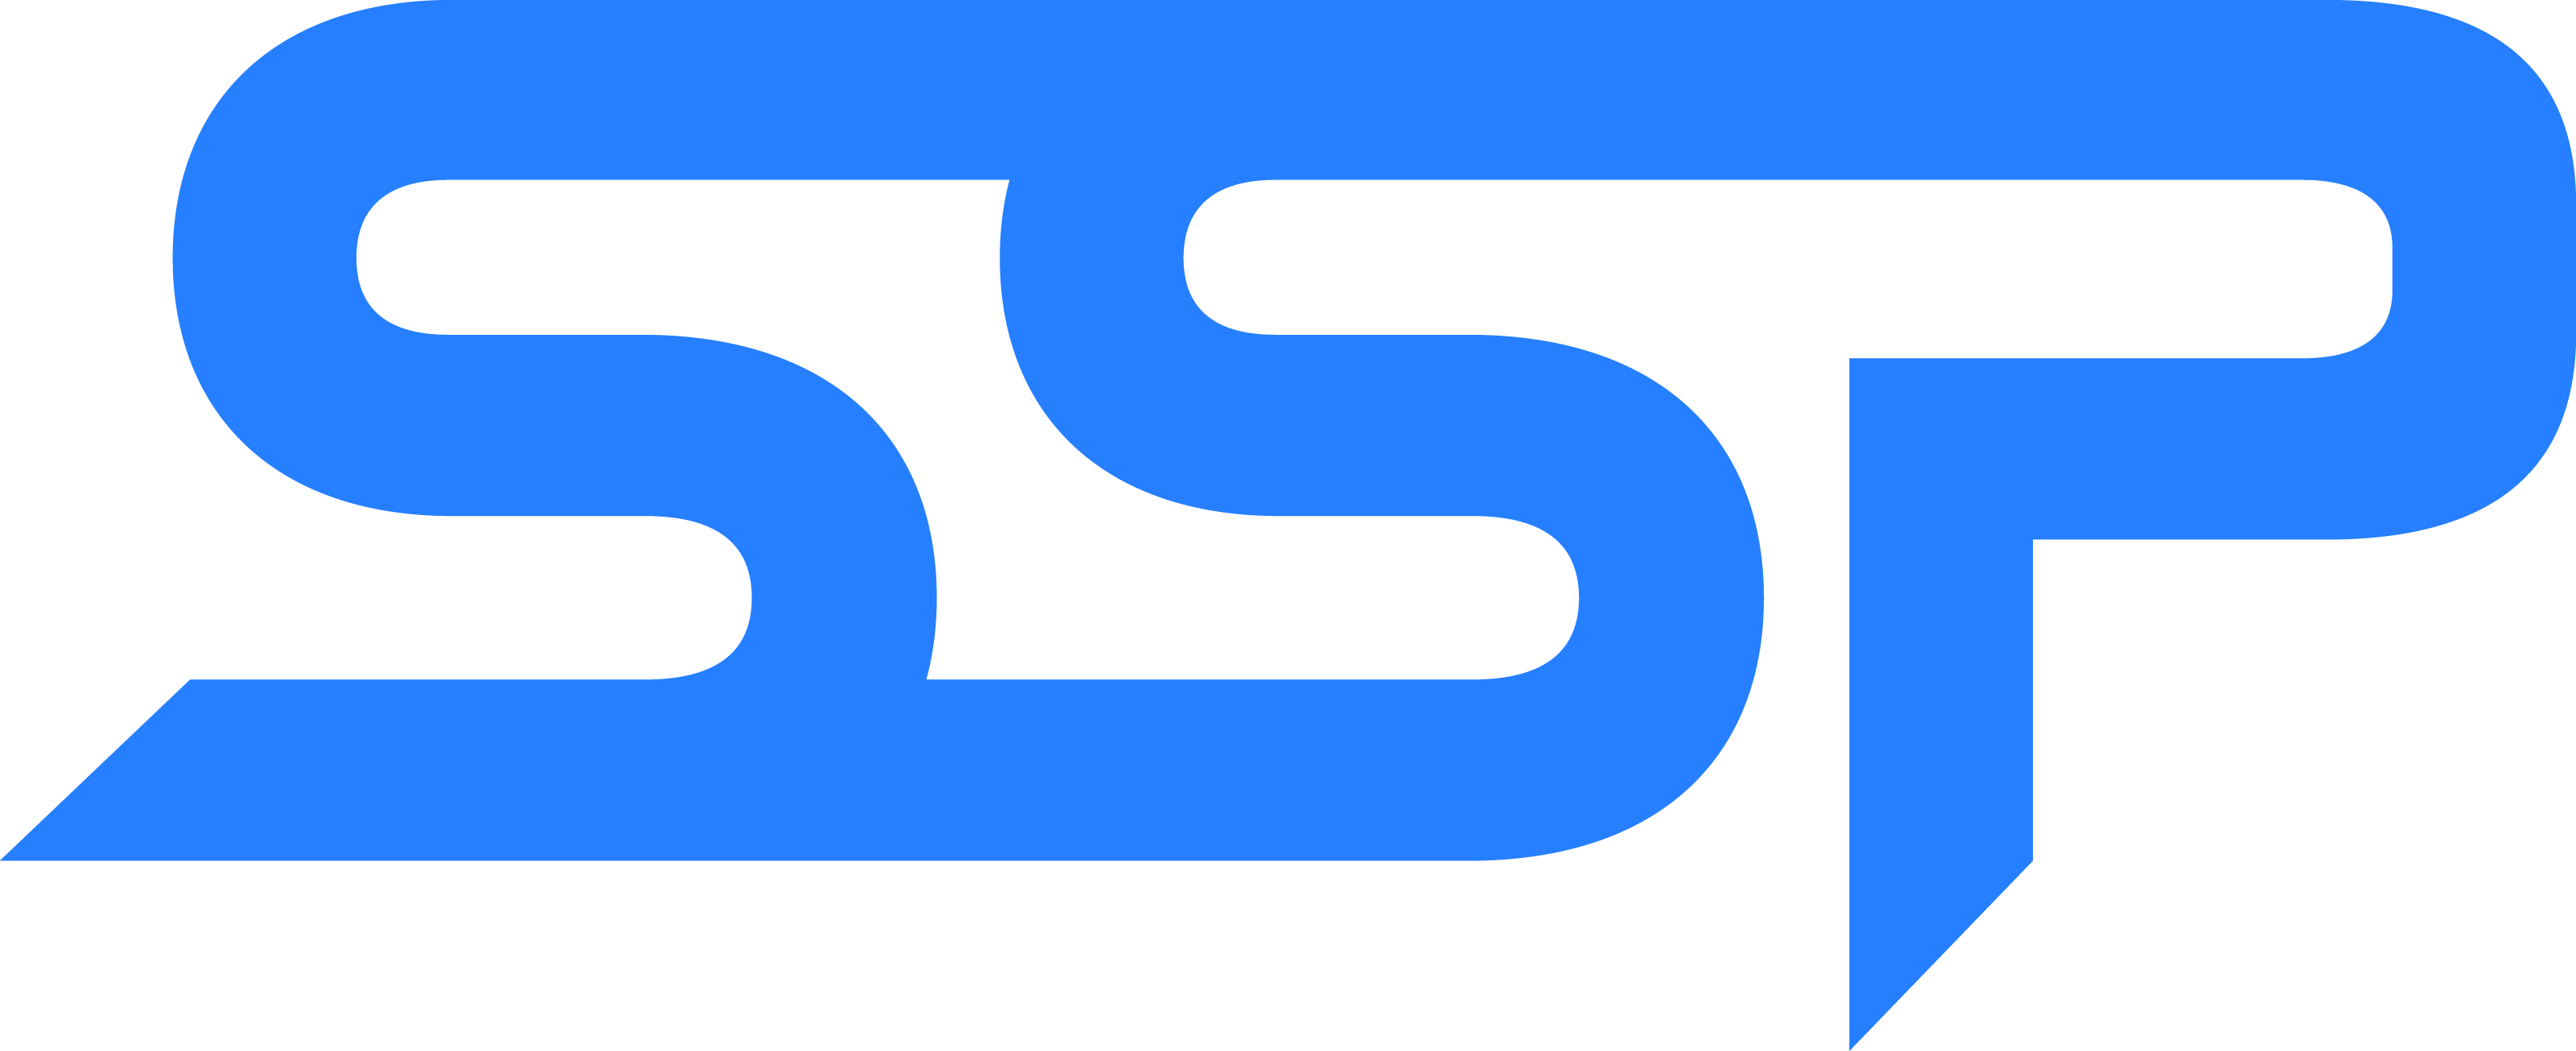 SSP Logo.jpg